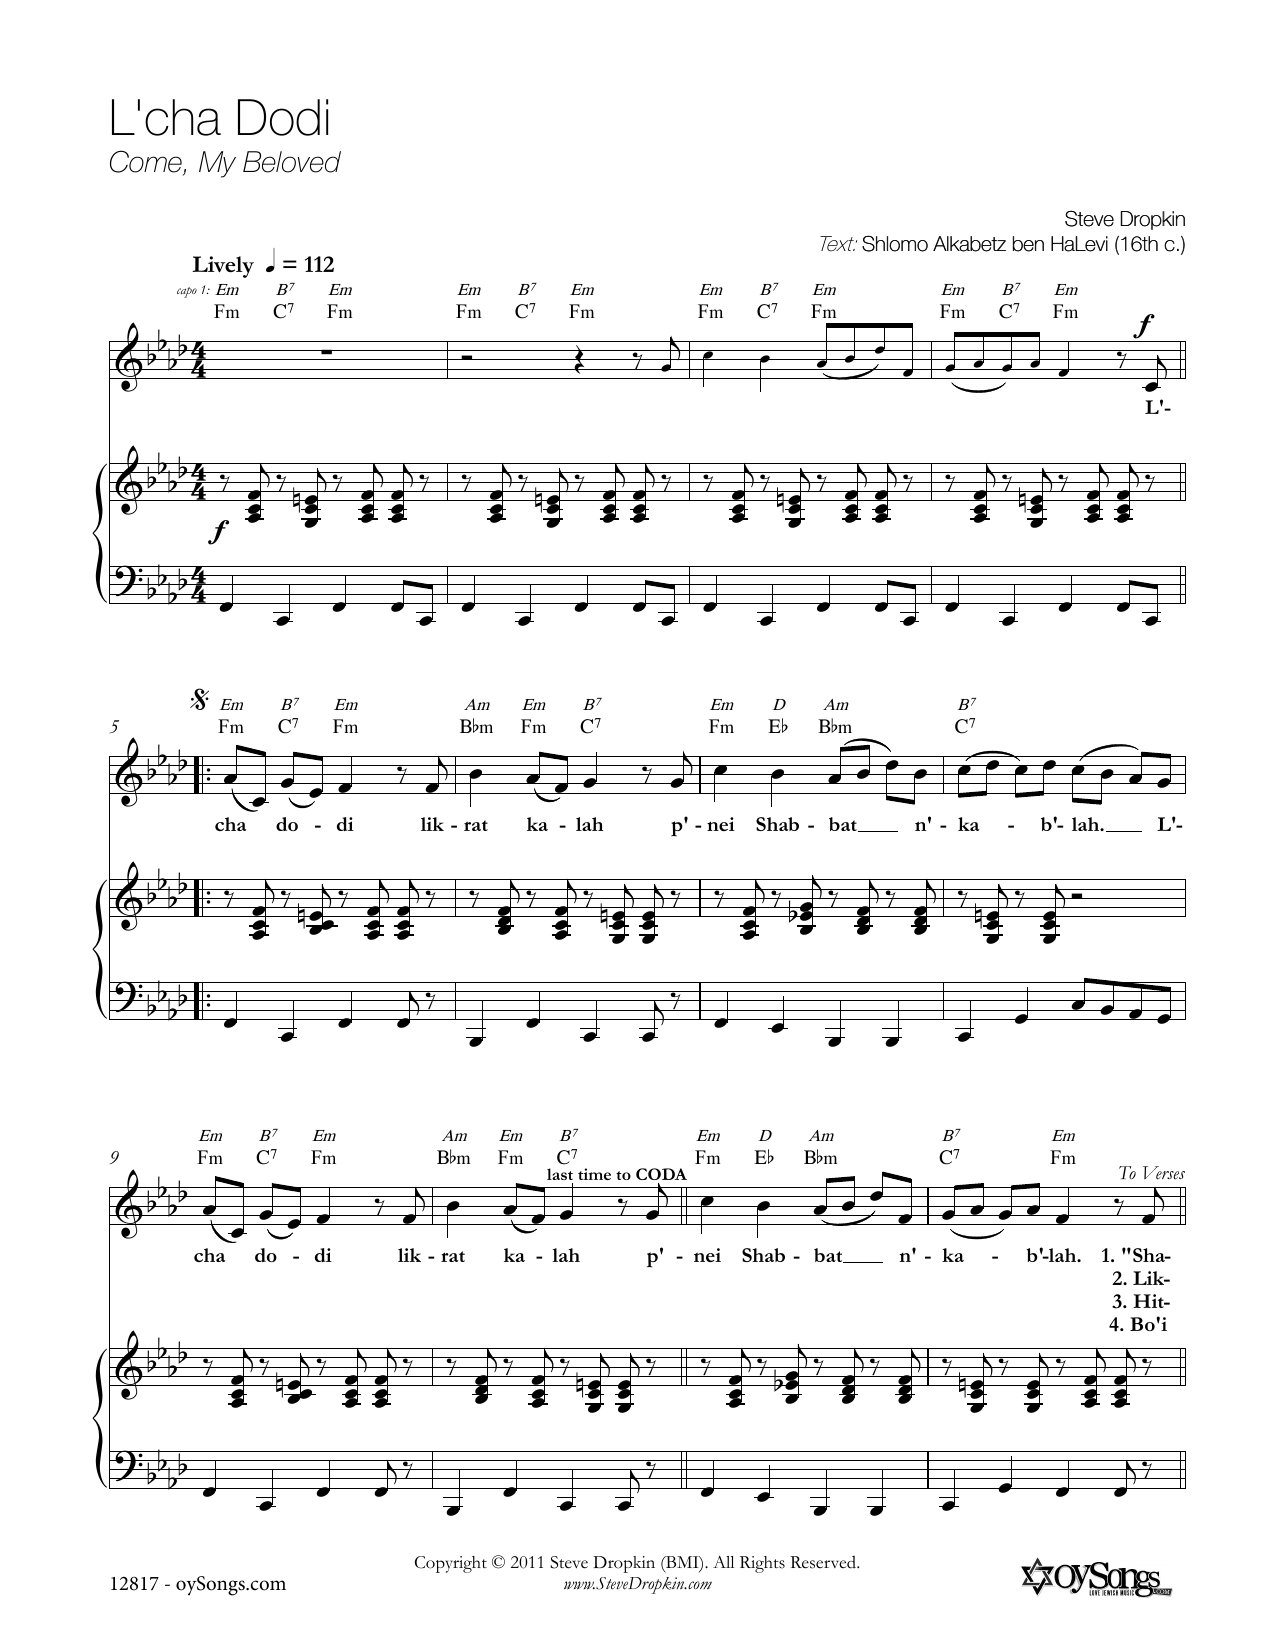 Steve Dropkin L'cha Dodi Sheet Music Notes & Chords for Melody Line, Lyrics & Chords - Download or Print PDF